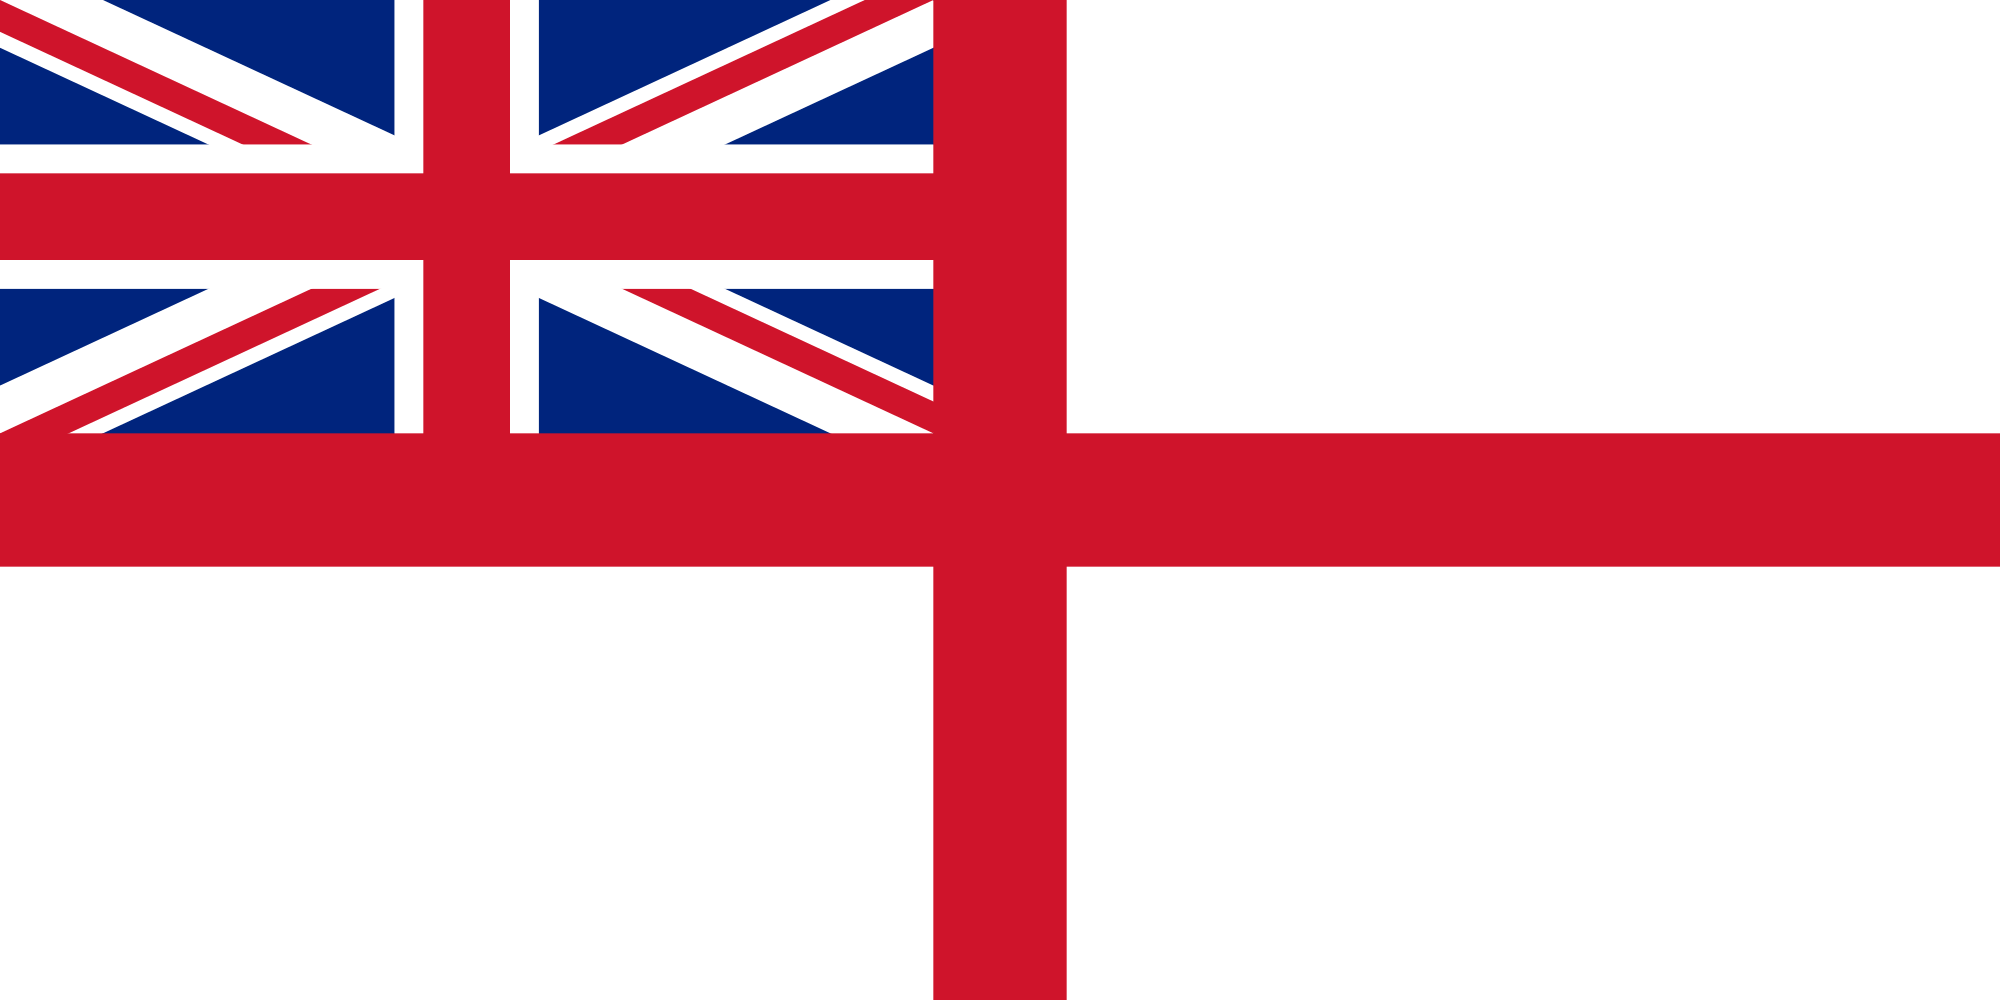 White Flag On a Red Cross Logo - Flag of England